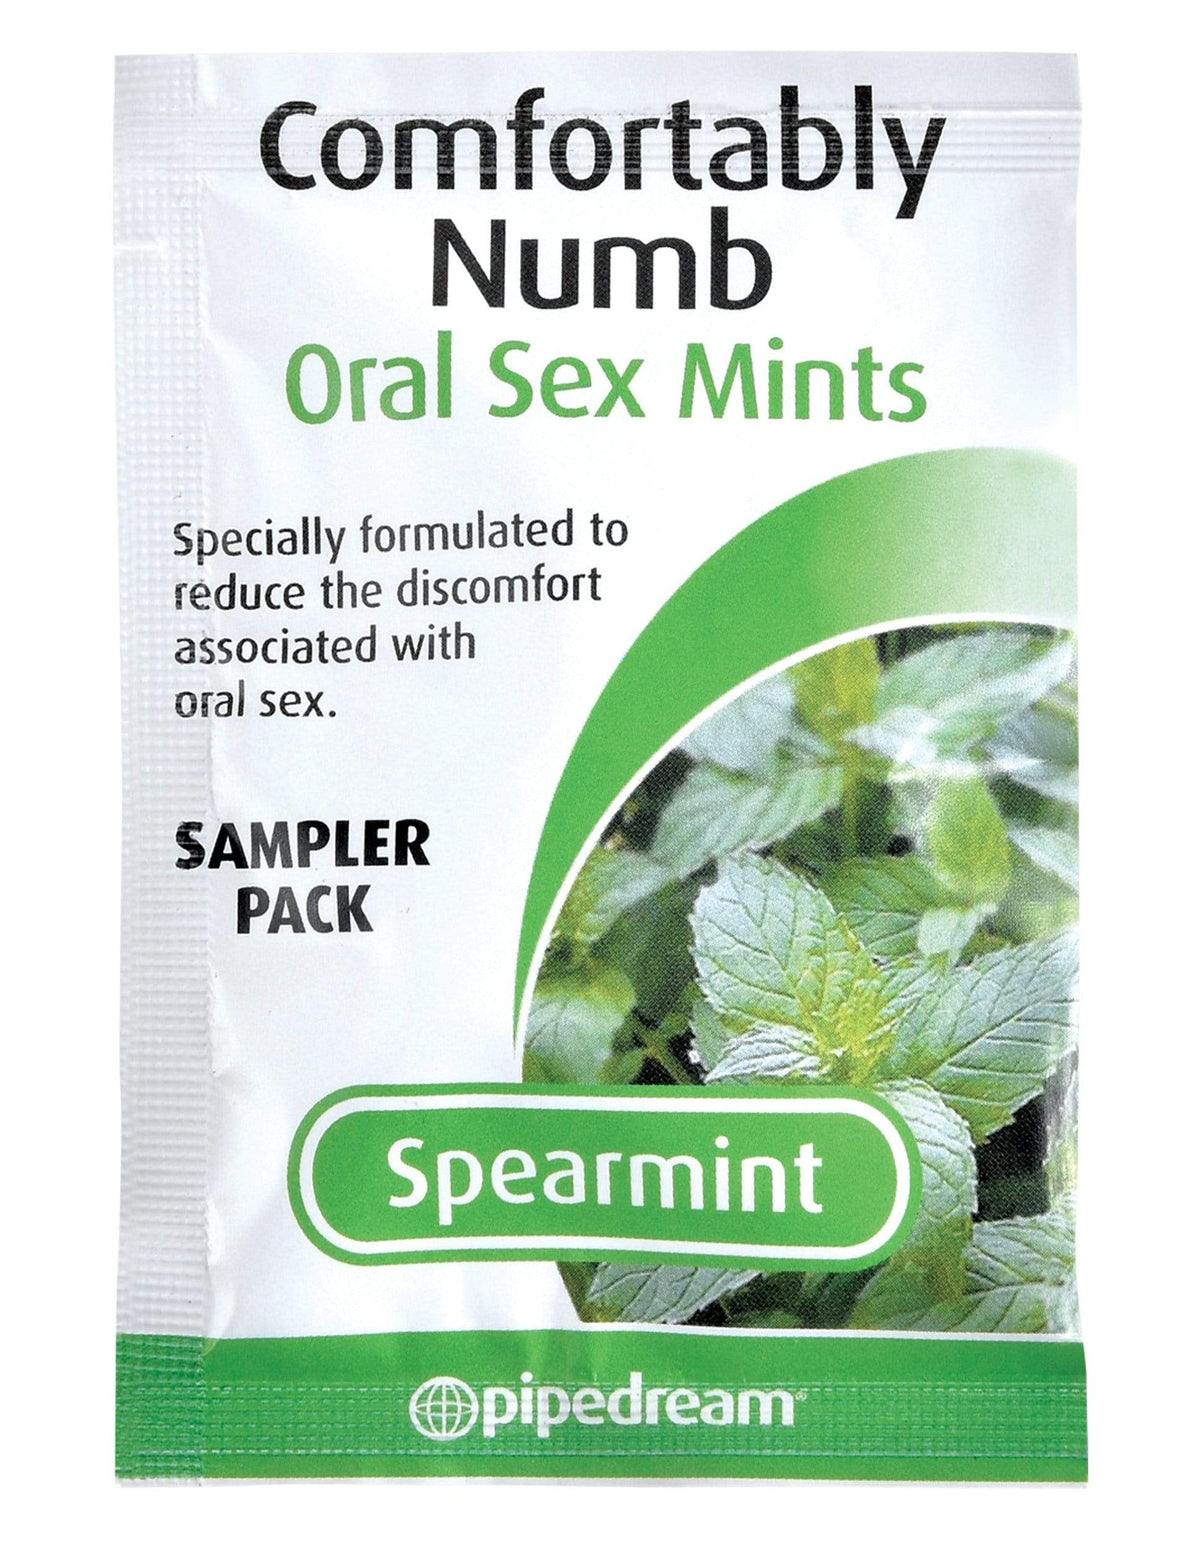 comfortably numb oral sex mints spearmint